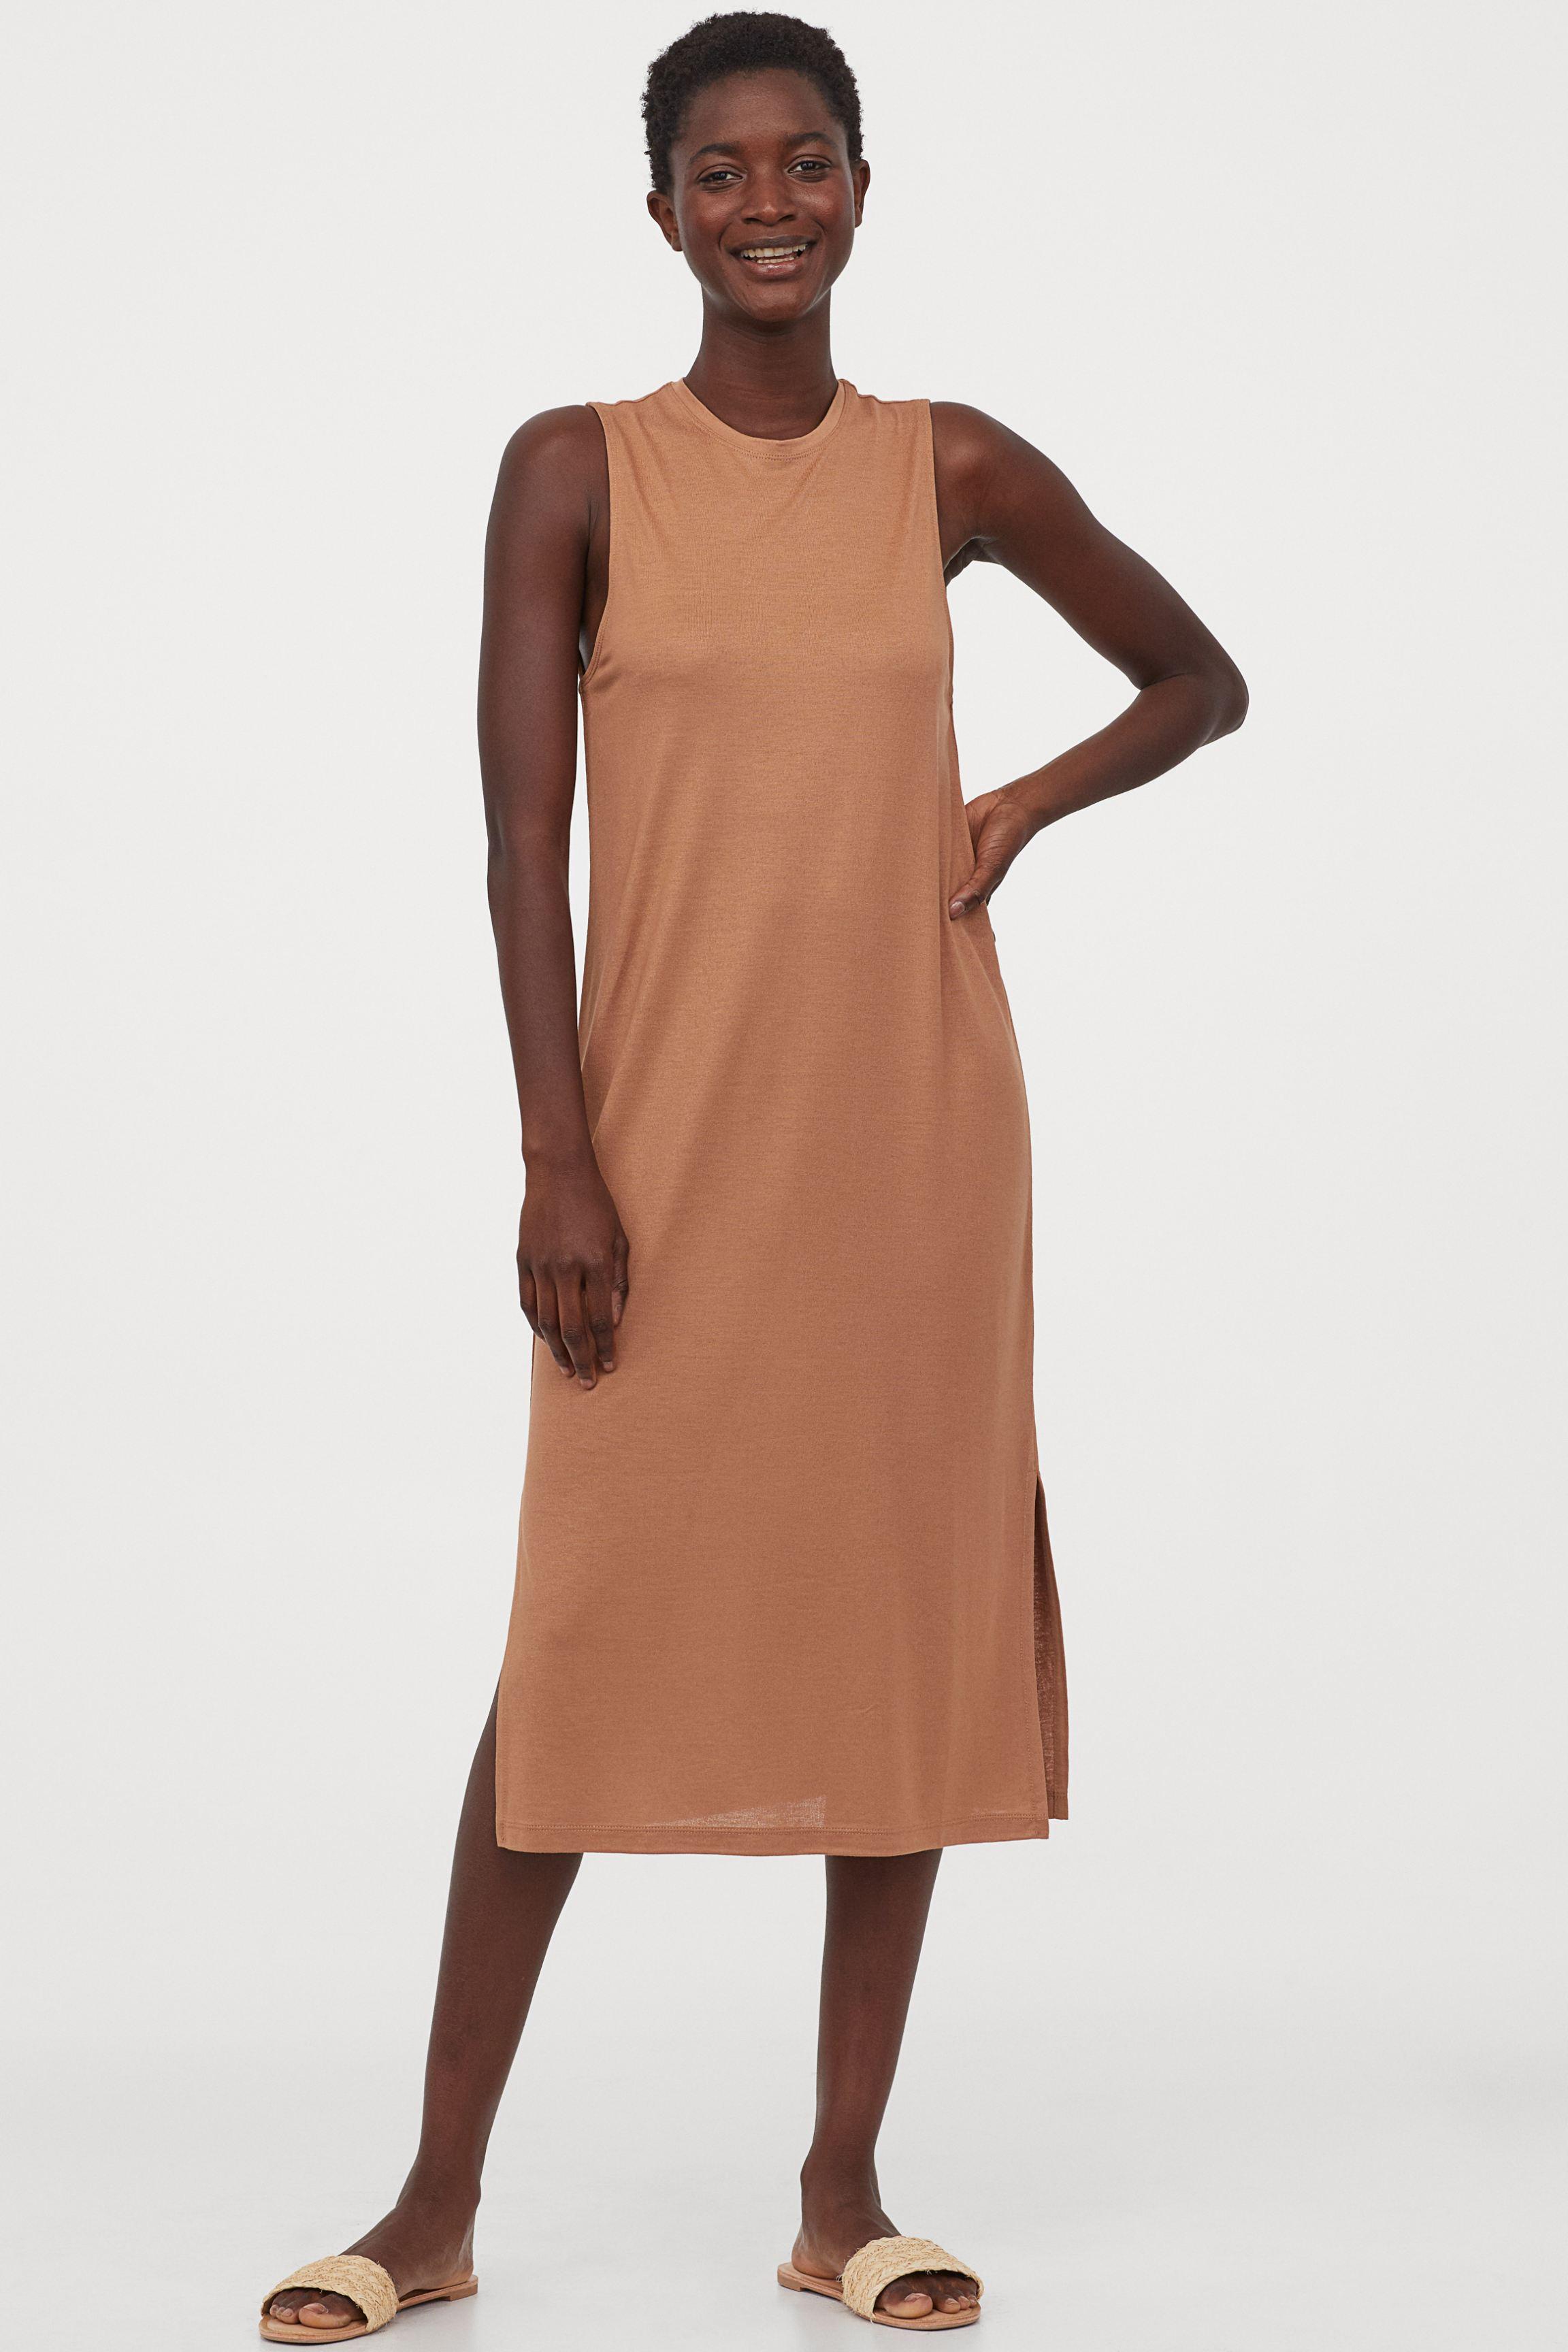 H&M Sleeveless Jersey Dress in Beige (Natural) - Lyst